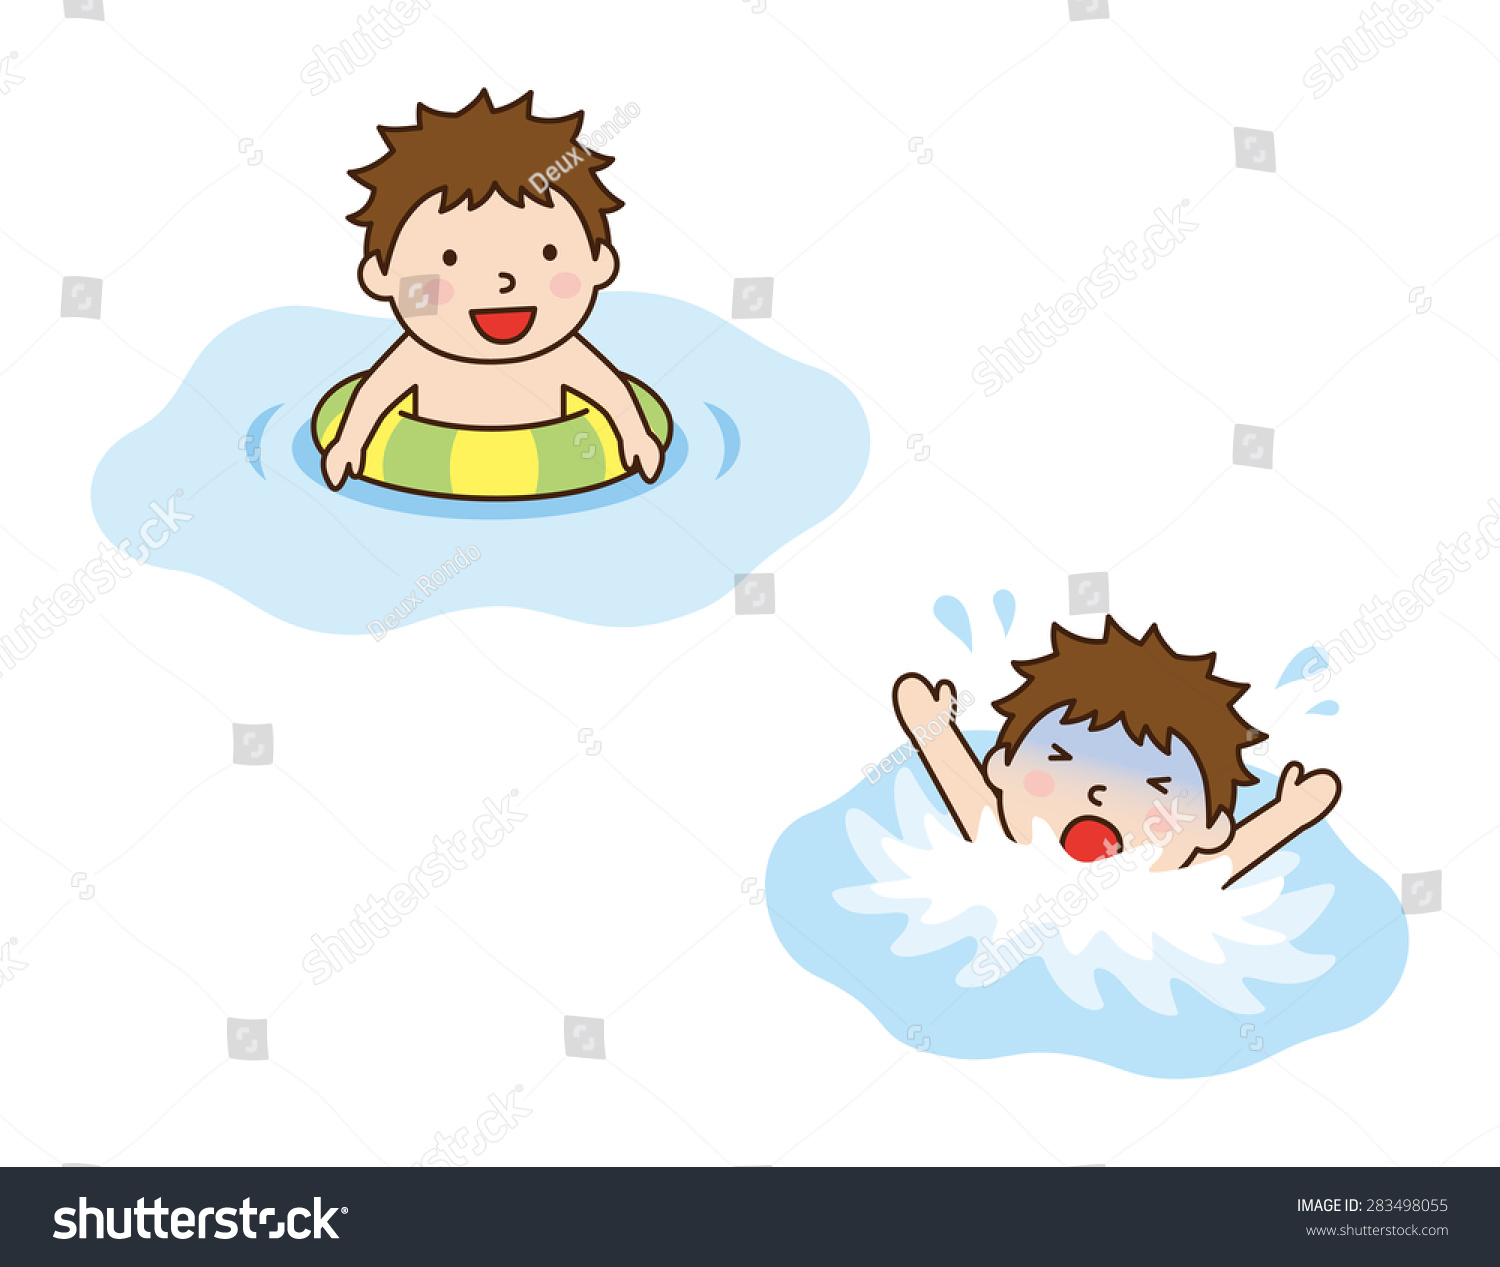 Swim Ring And Boy / Drowning Boy Stock Vector Illustration 283498055 ...